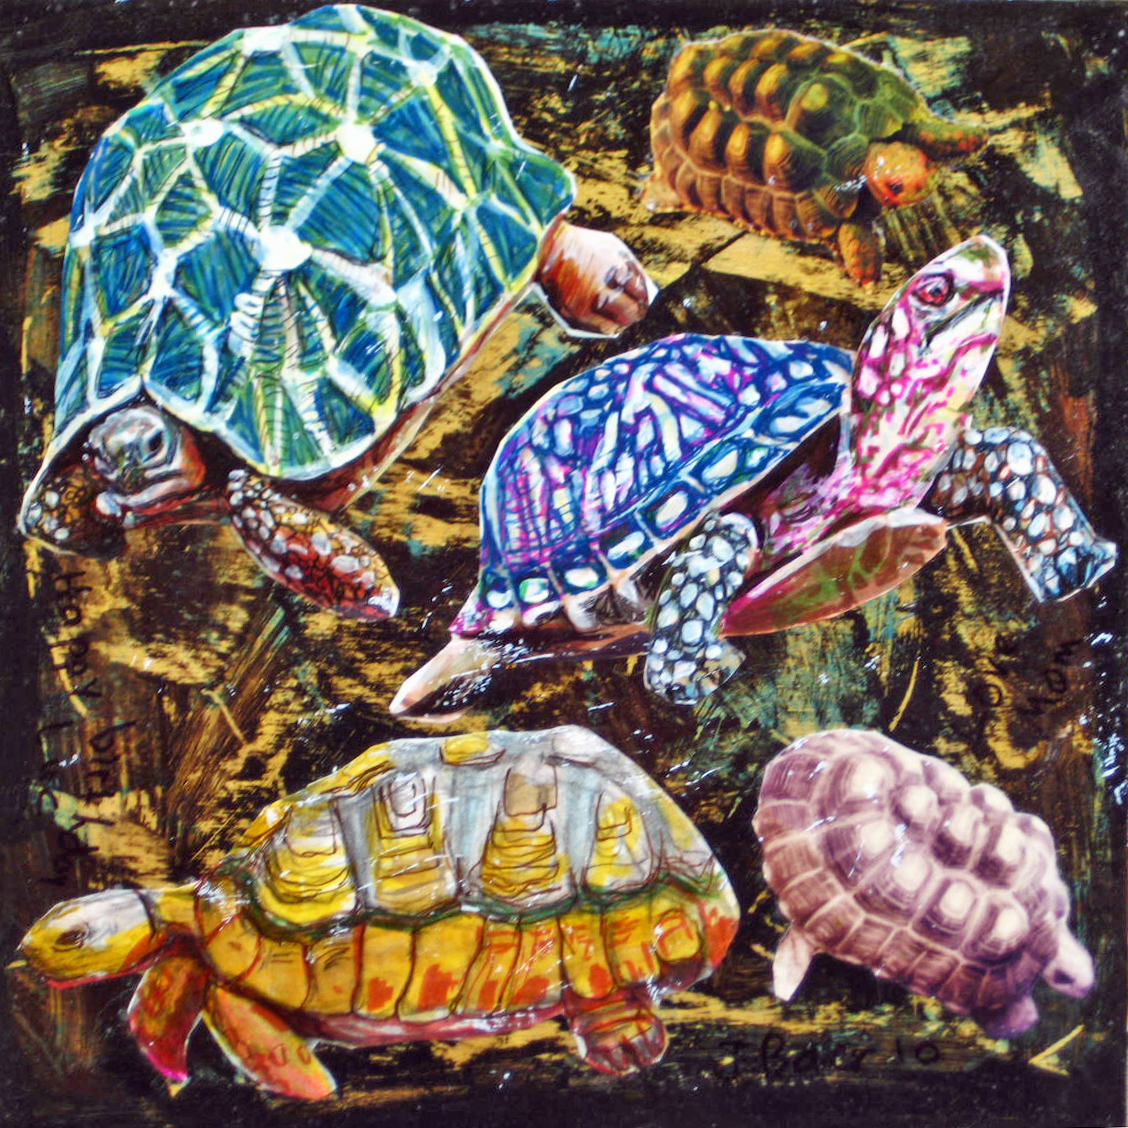 Luc’s Tortoises, 2006, 12x12”, watercolor and acrylic on wood panel, NFS